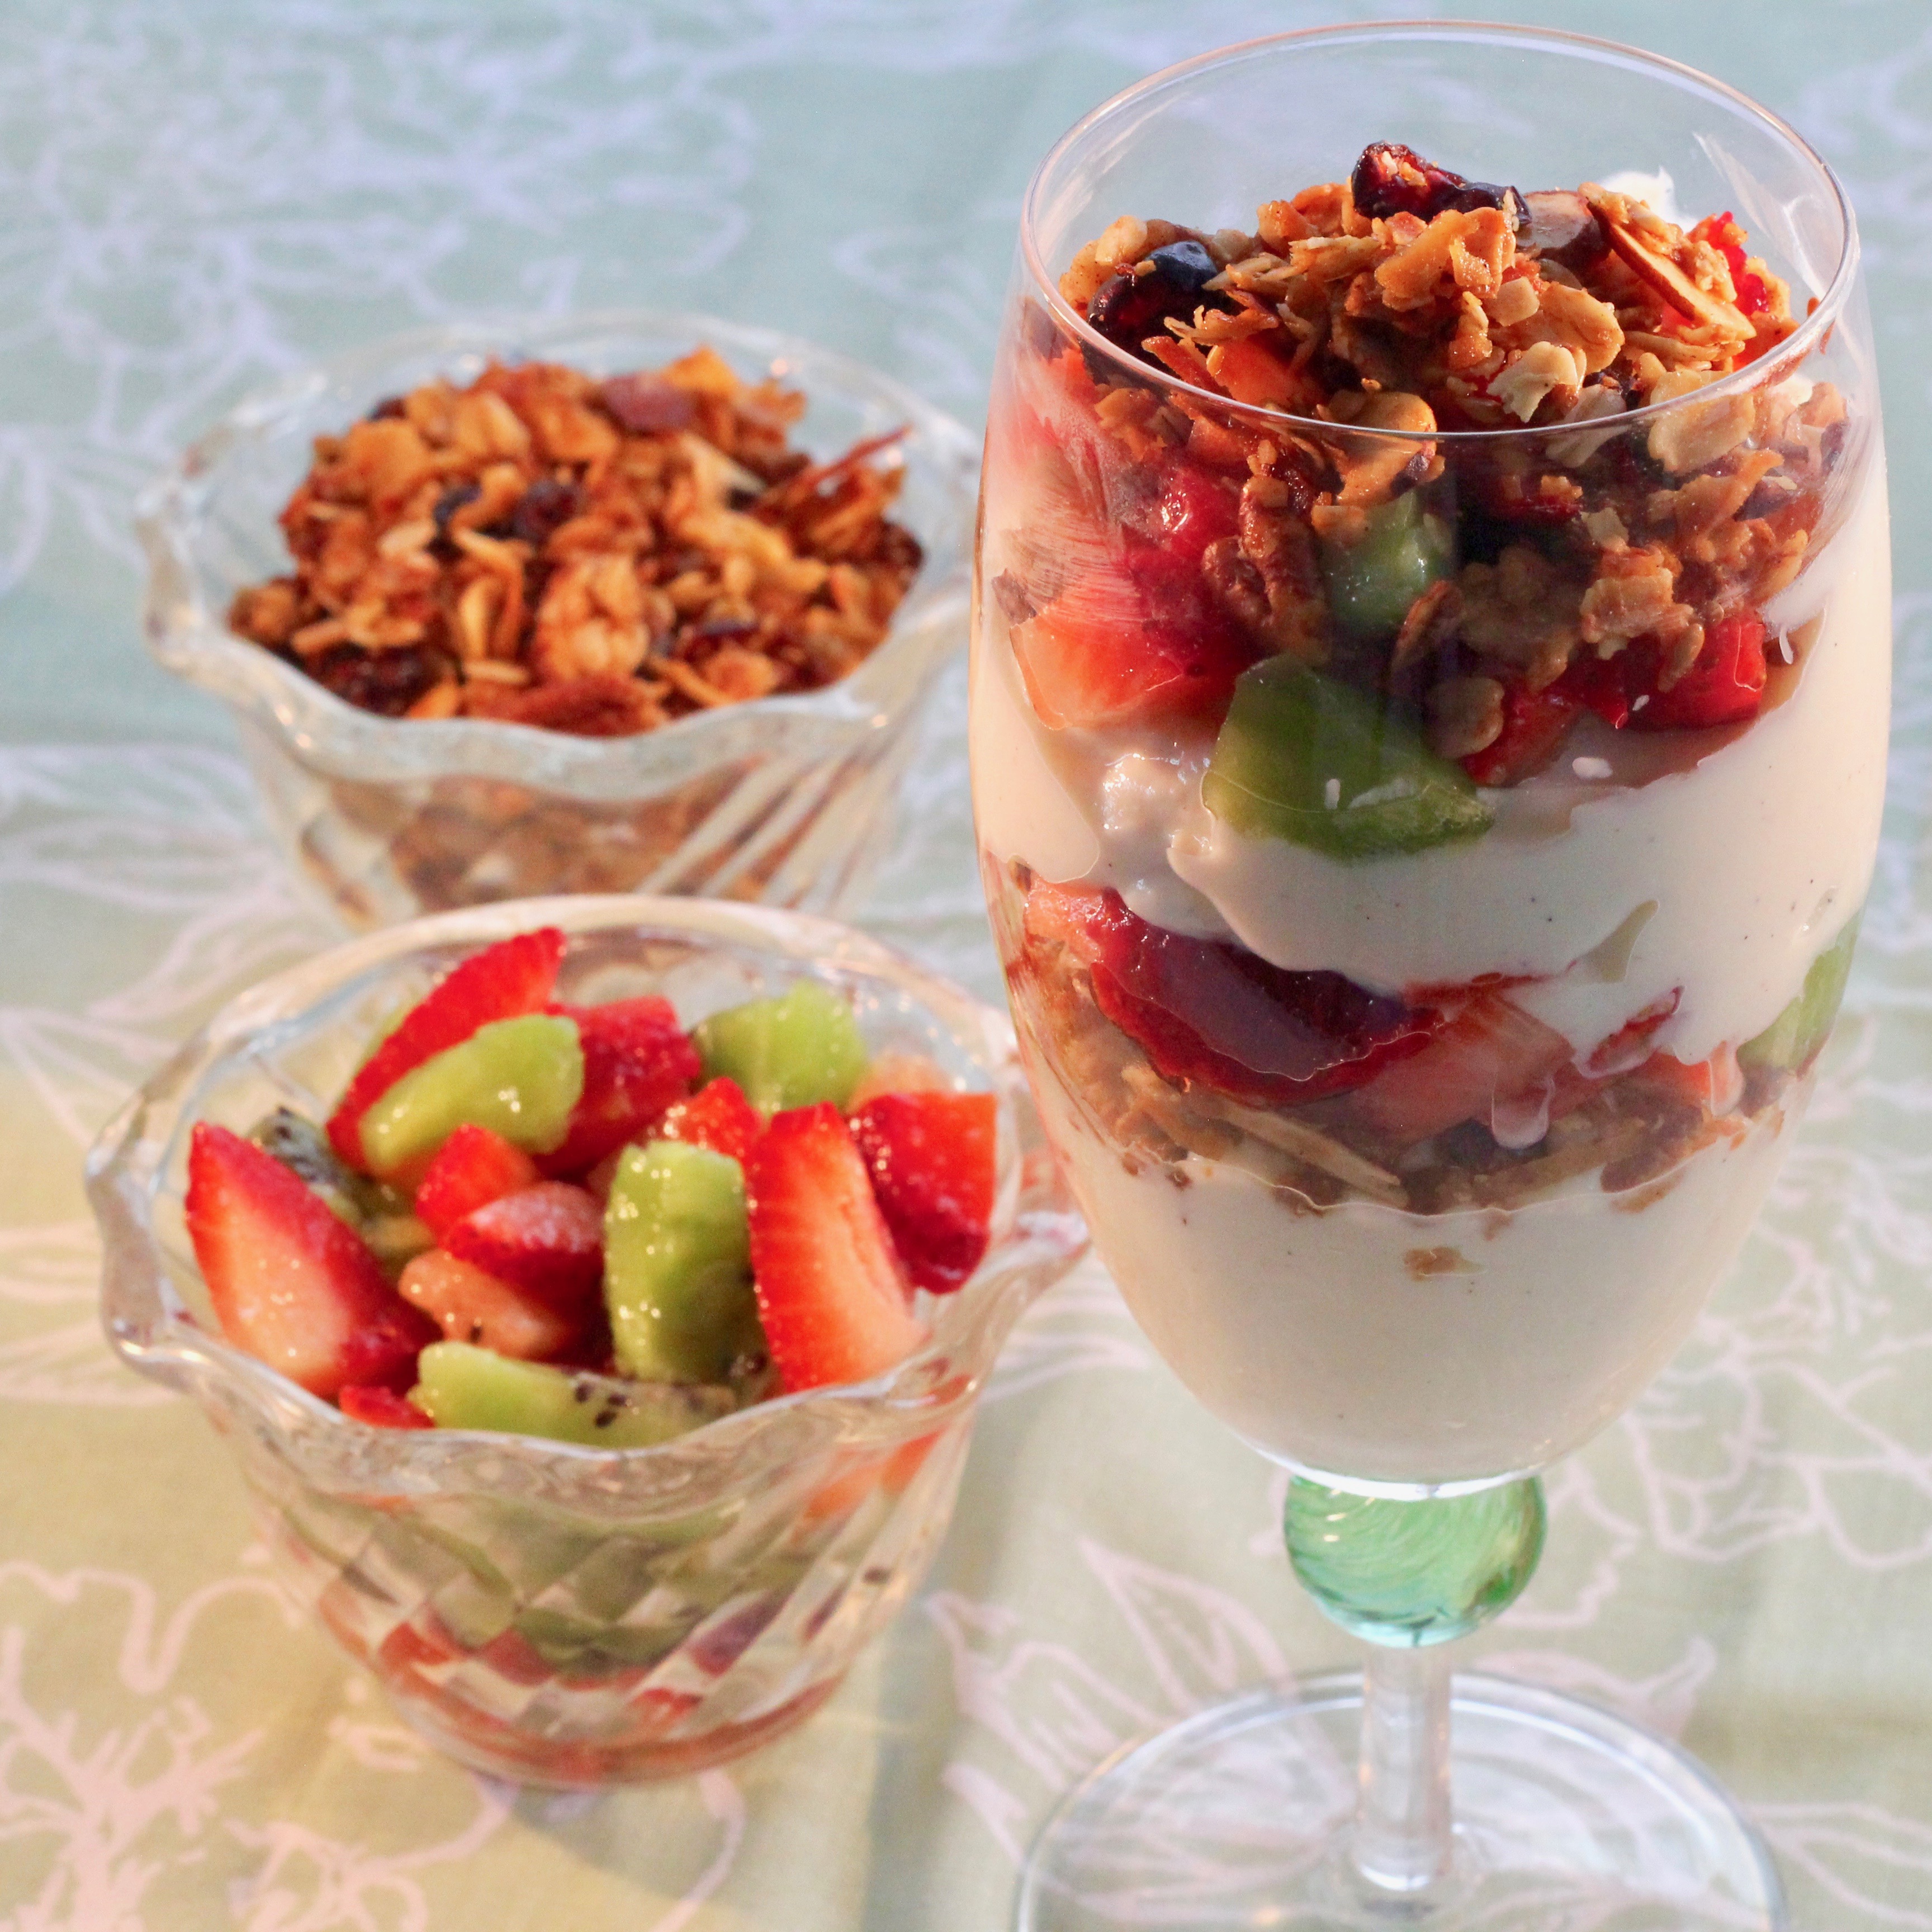 Breakfast Parfait with Granola, Yogurt, and Fruit